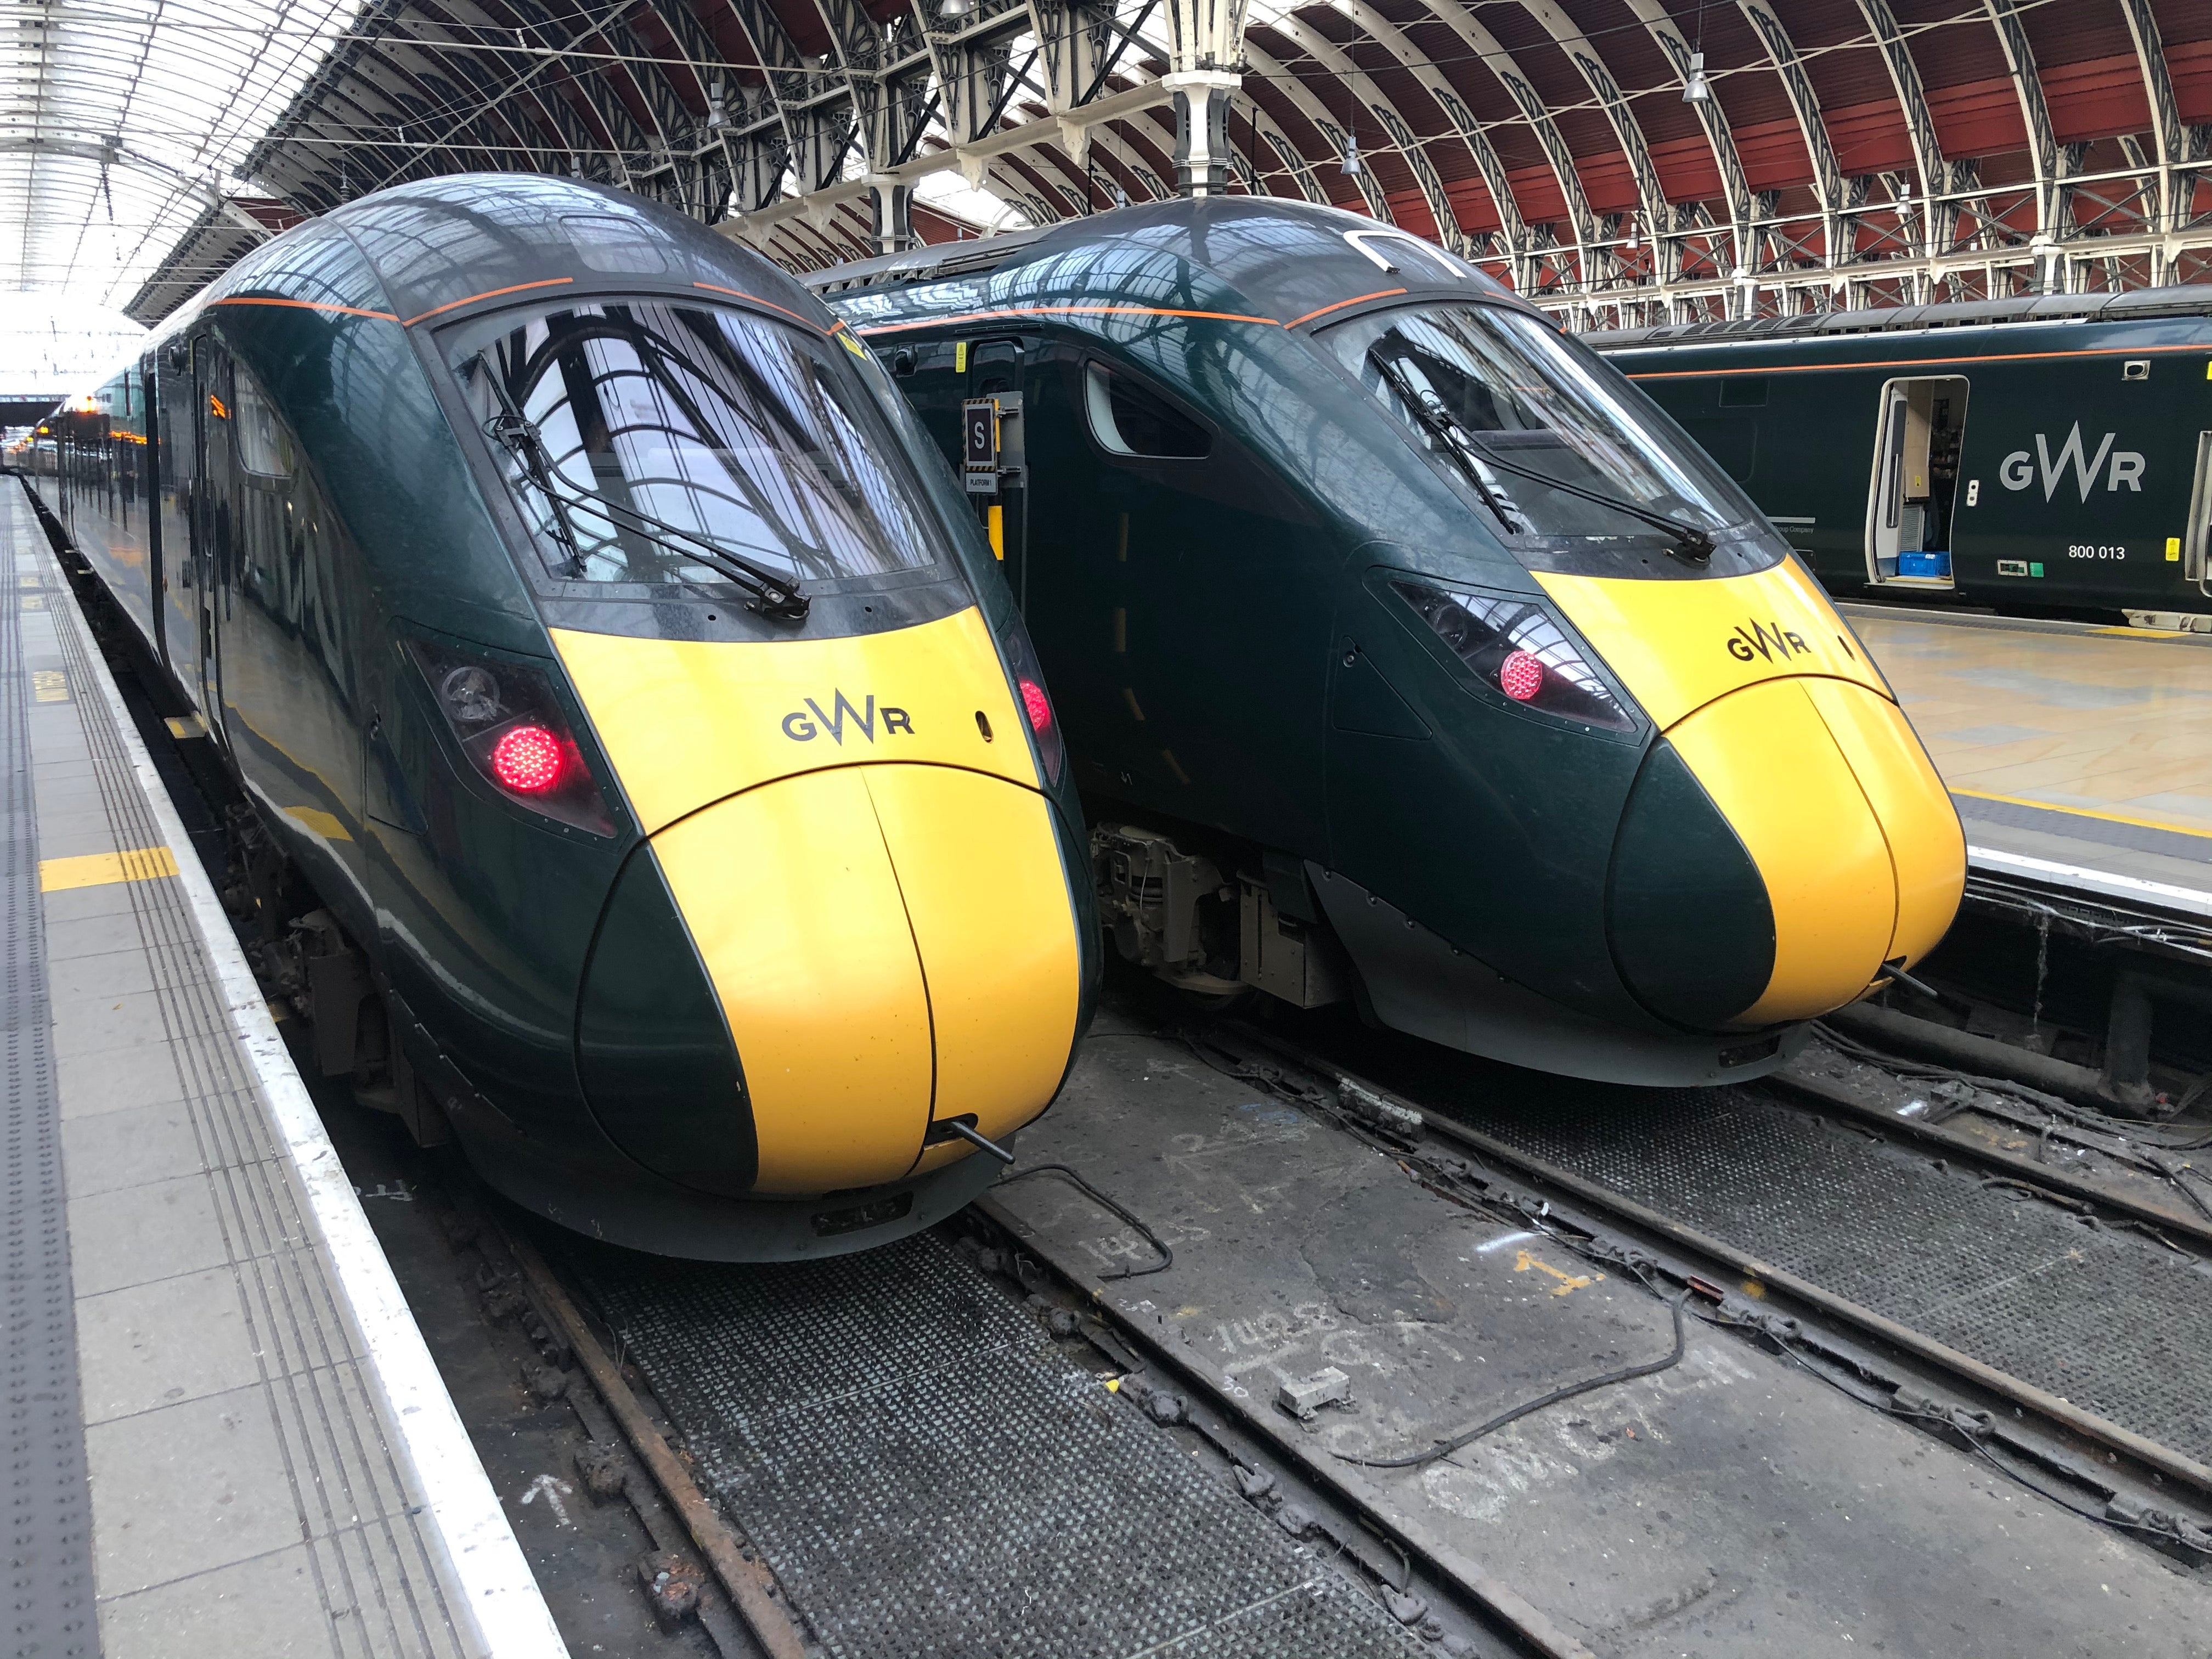 Going nowhere: GWR inter-city express trains at London Paddington